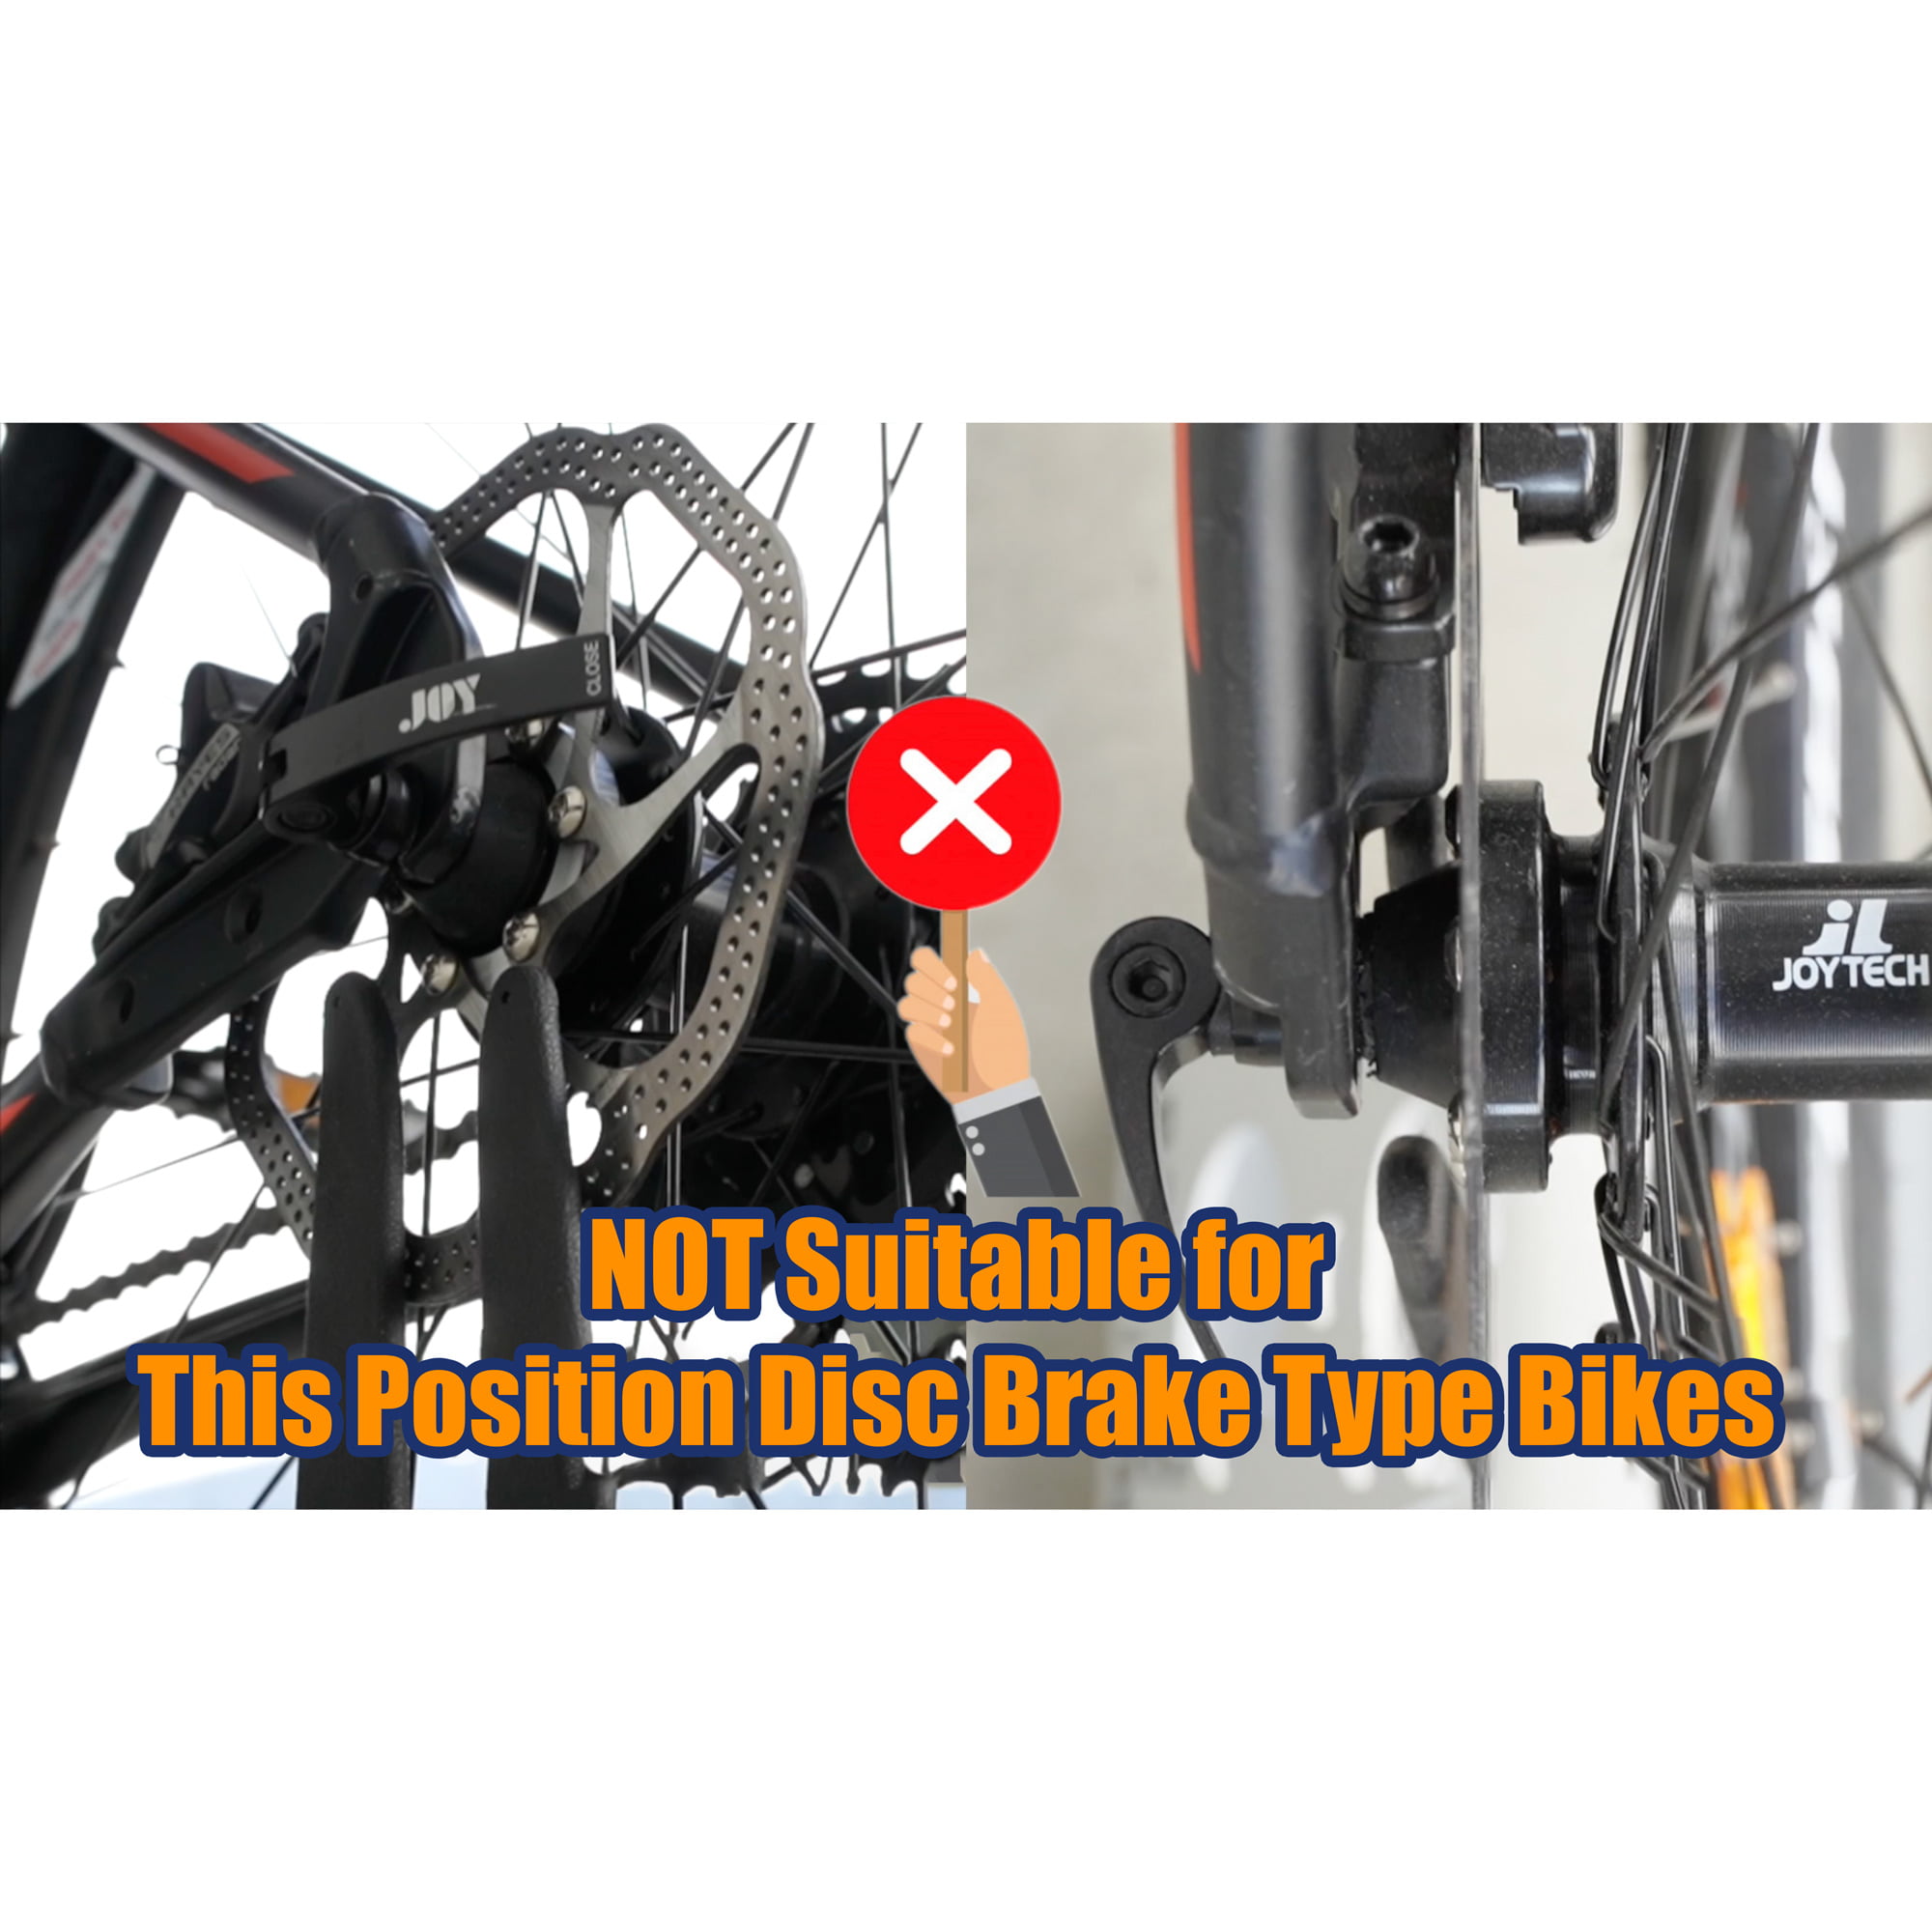 BIKEHAND Rear Hub Mount Bike Bicycle Stand Storage Rack